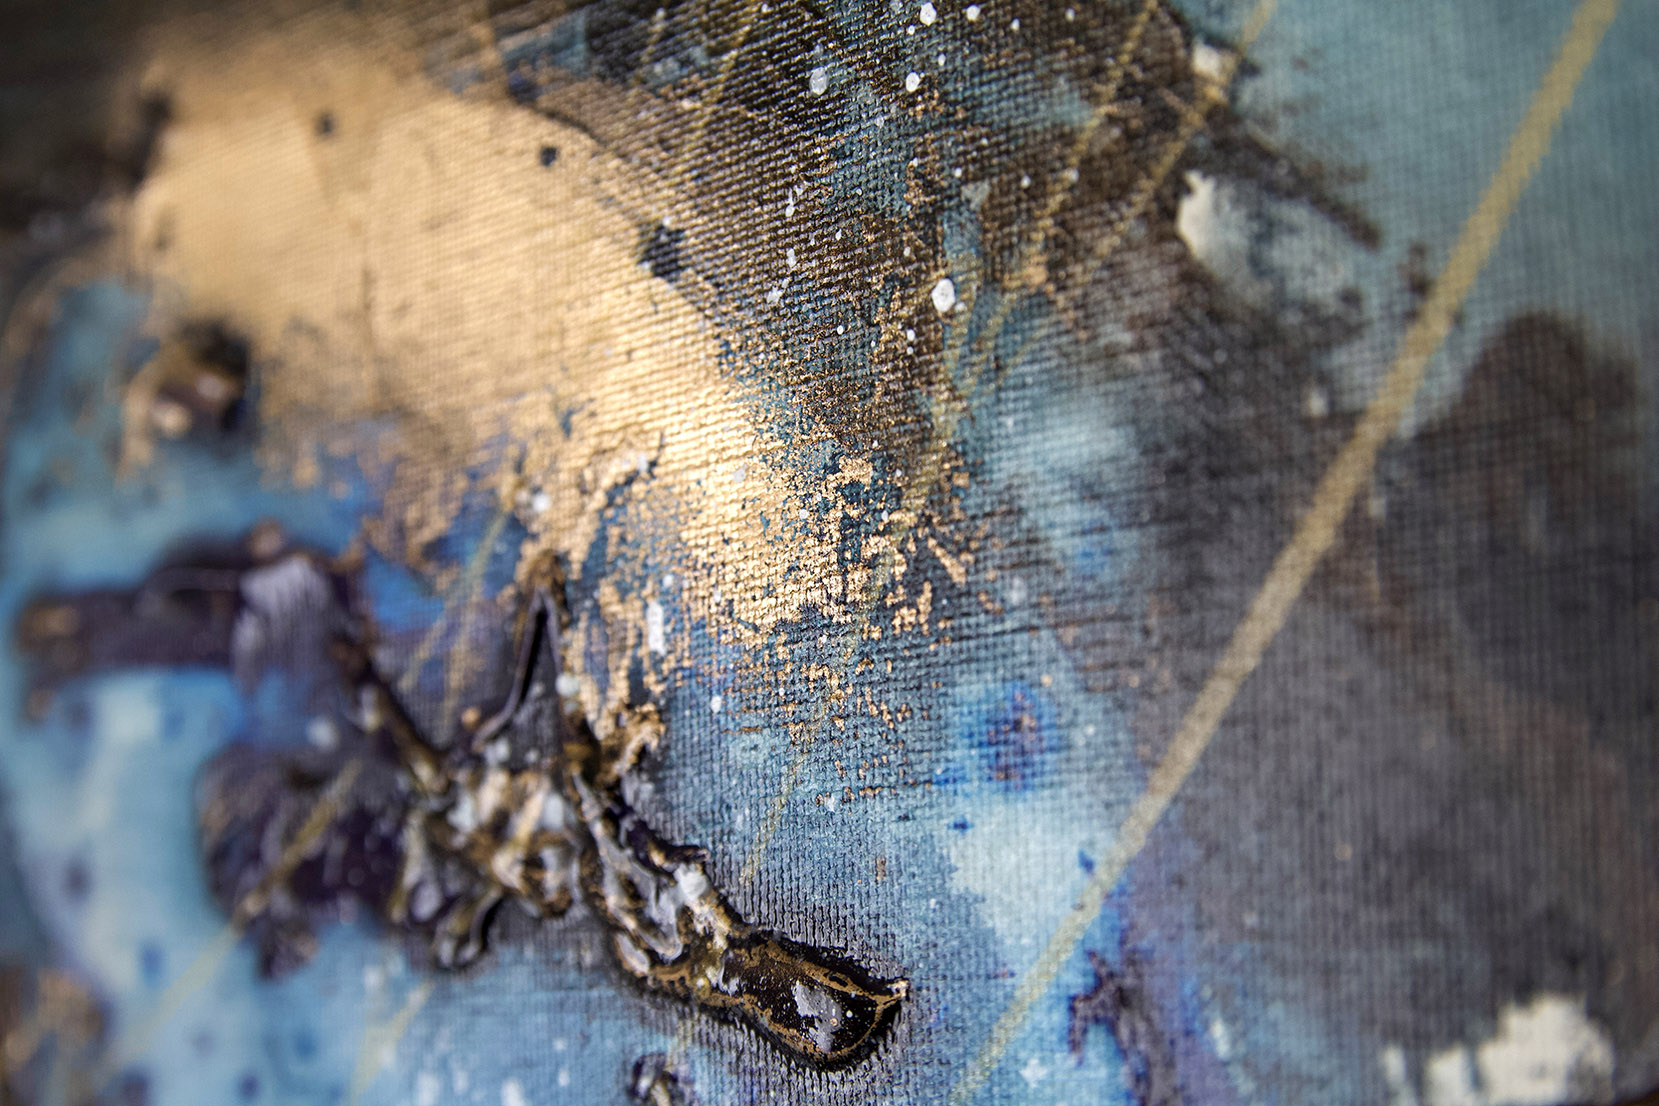 「Blue in Flux」H45×W60cm, Acrylic paint, Plating pigment, Canvas, 2022